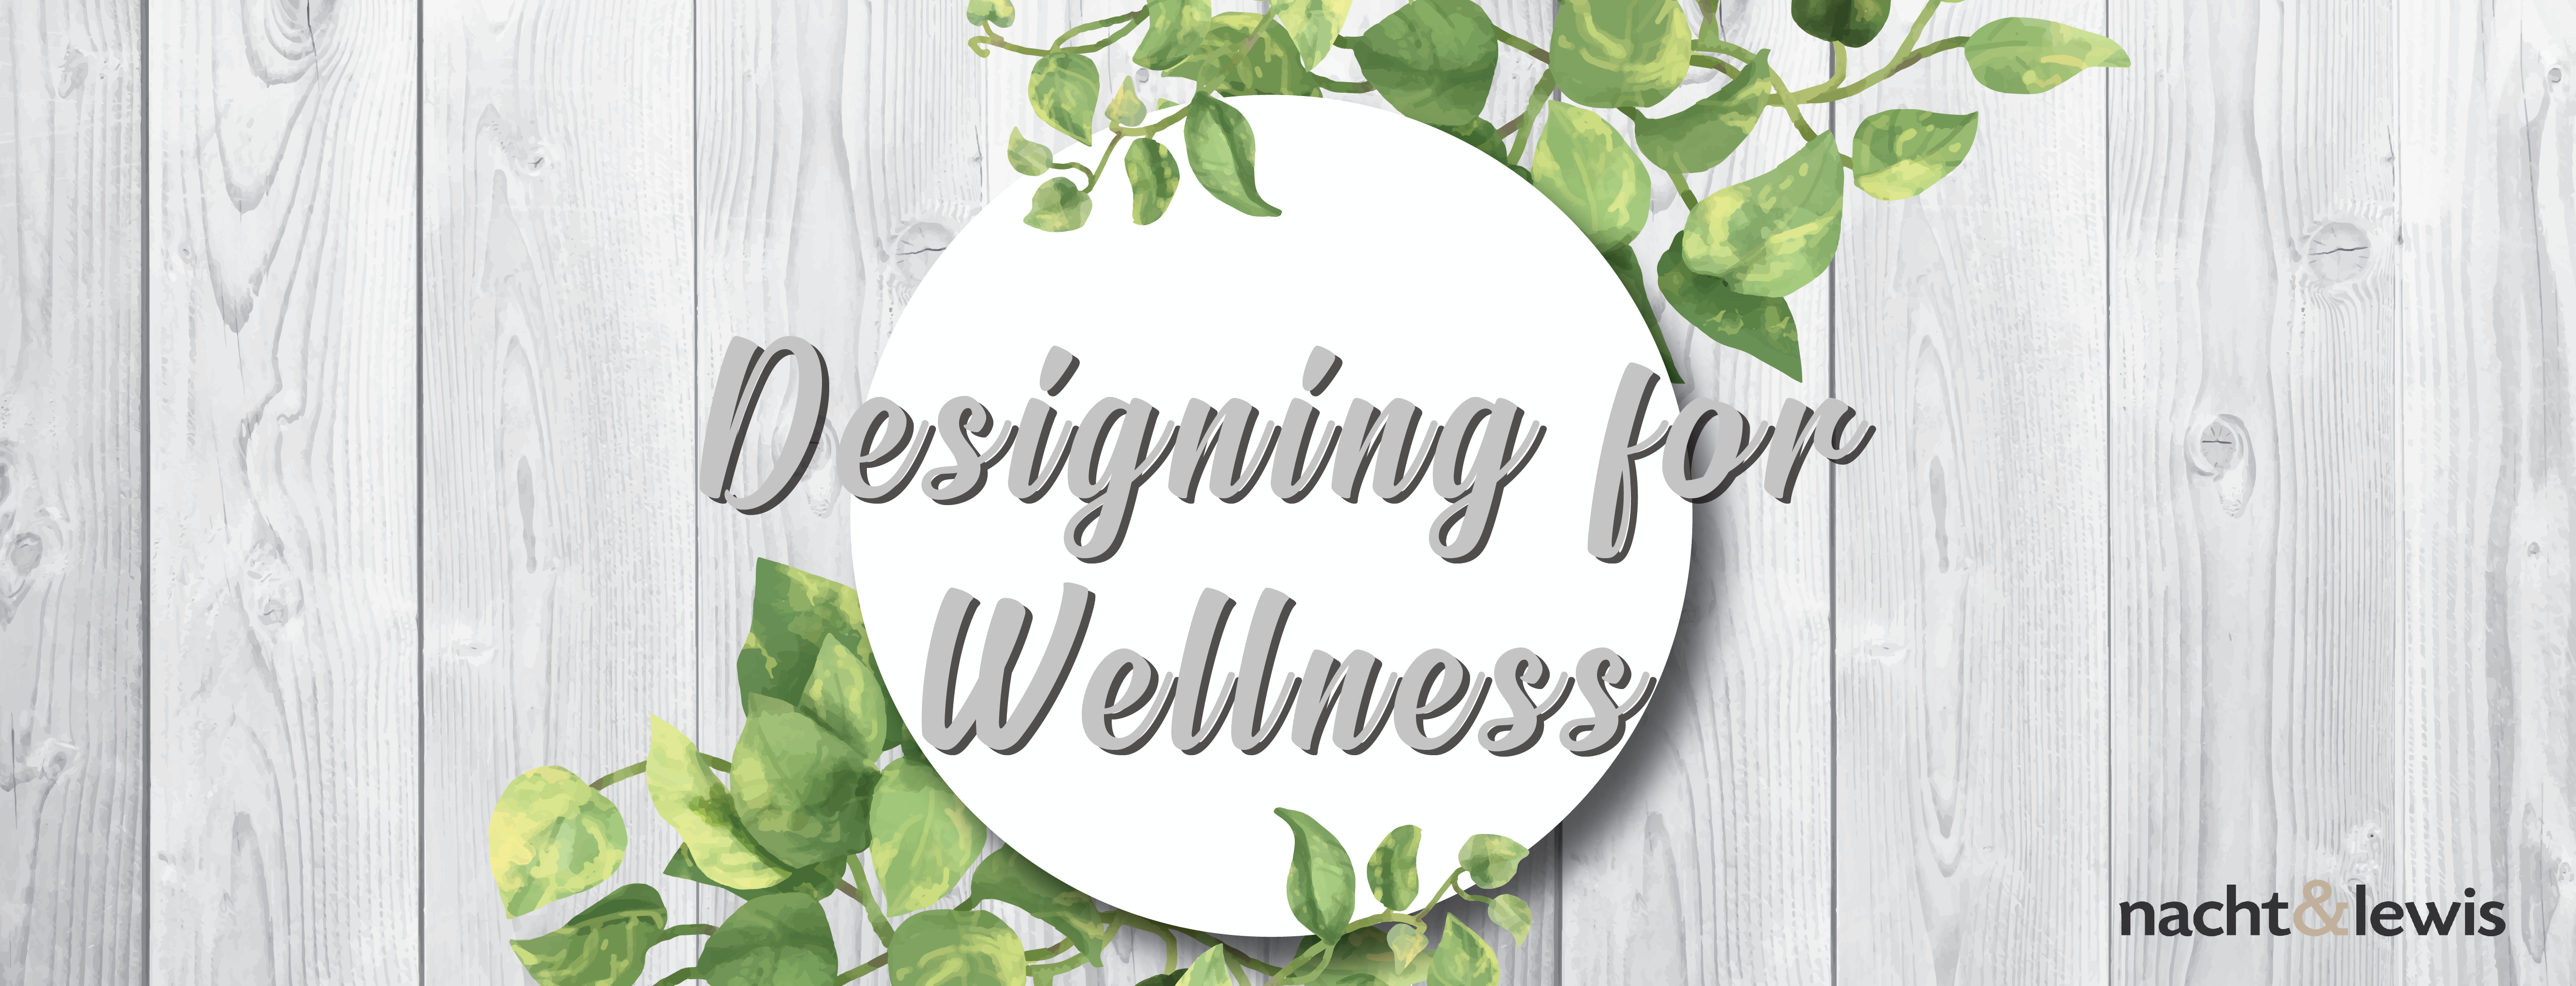 Designing for wellness-01